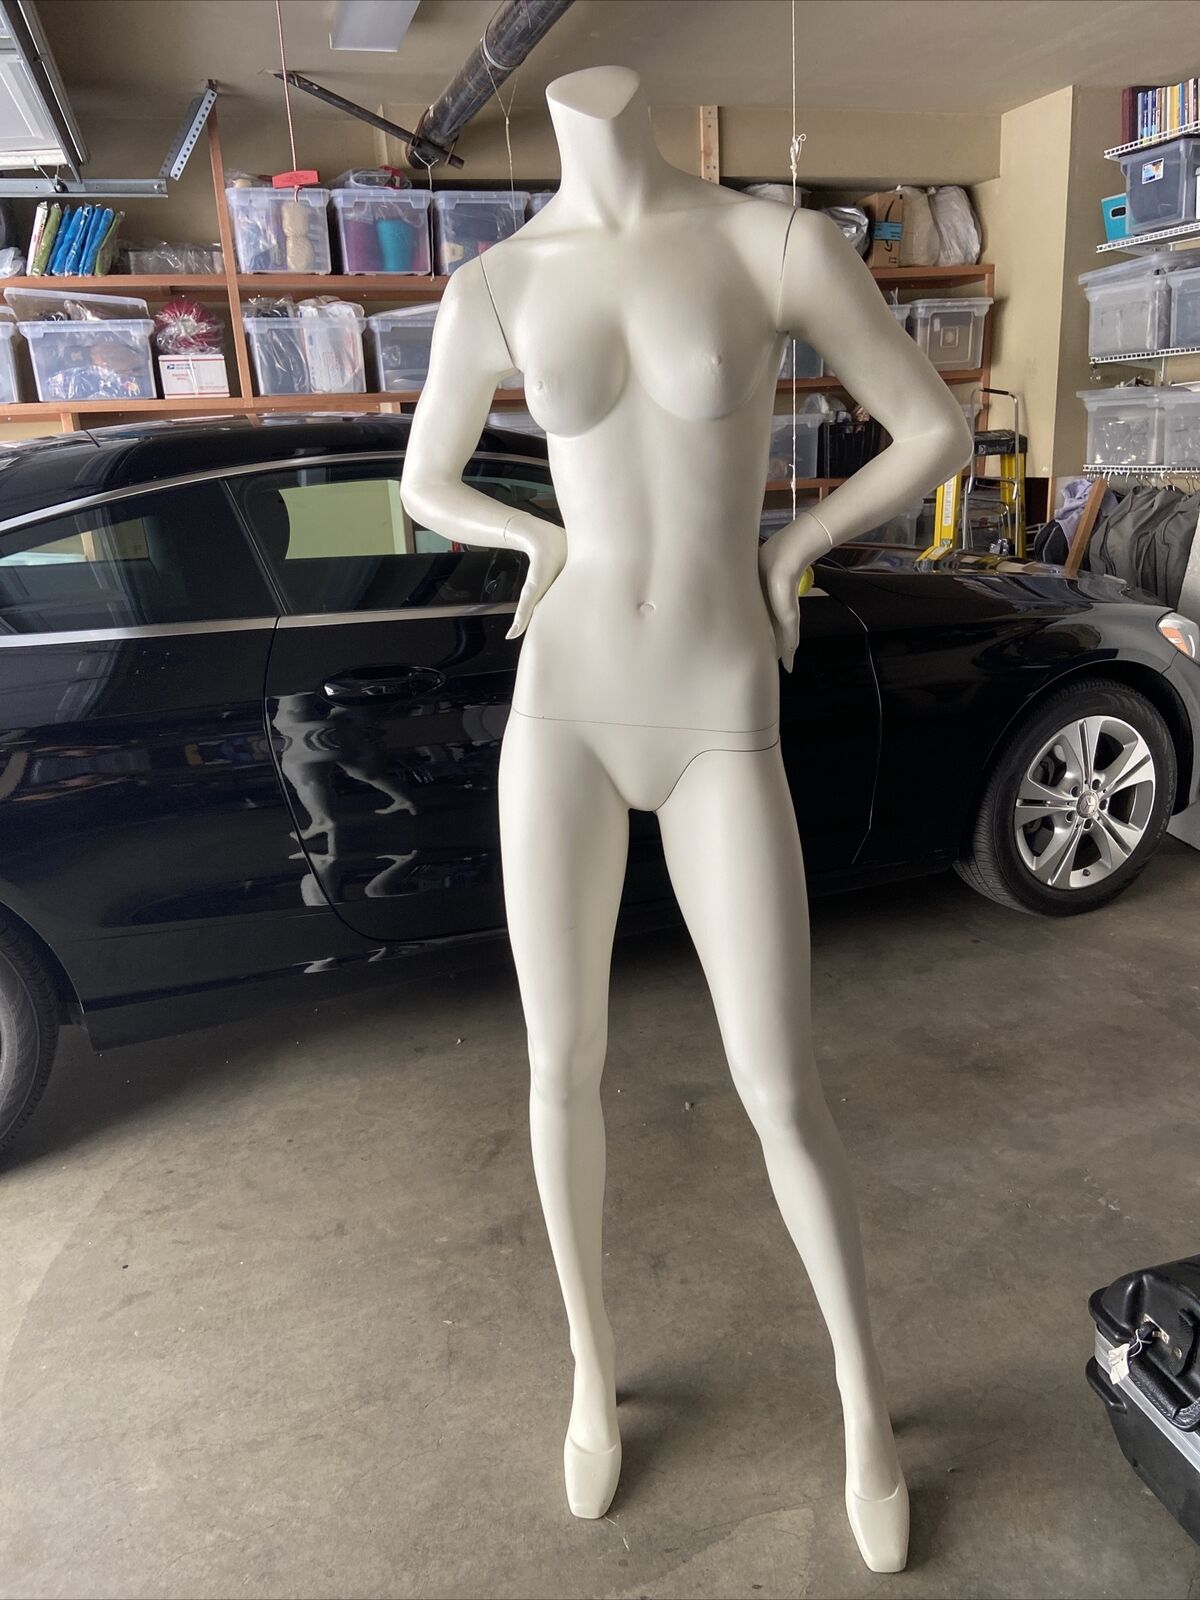 52 Headless Child Mannequin-Matte White - ACME Display